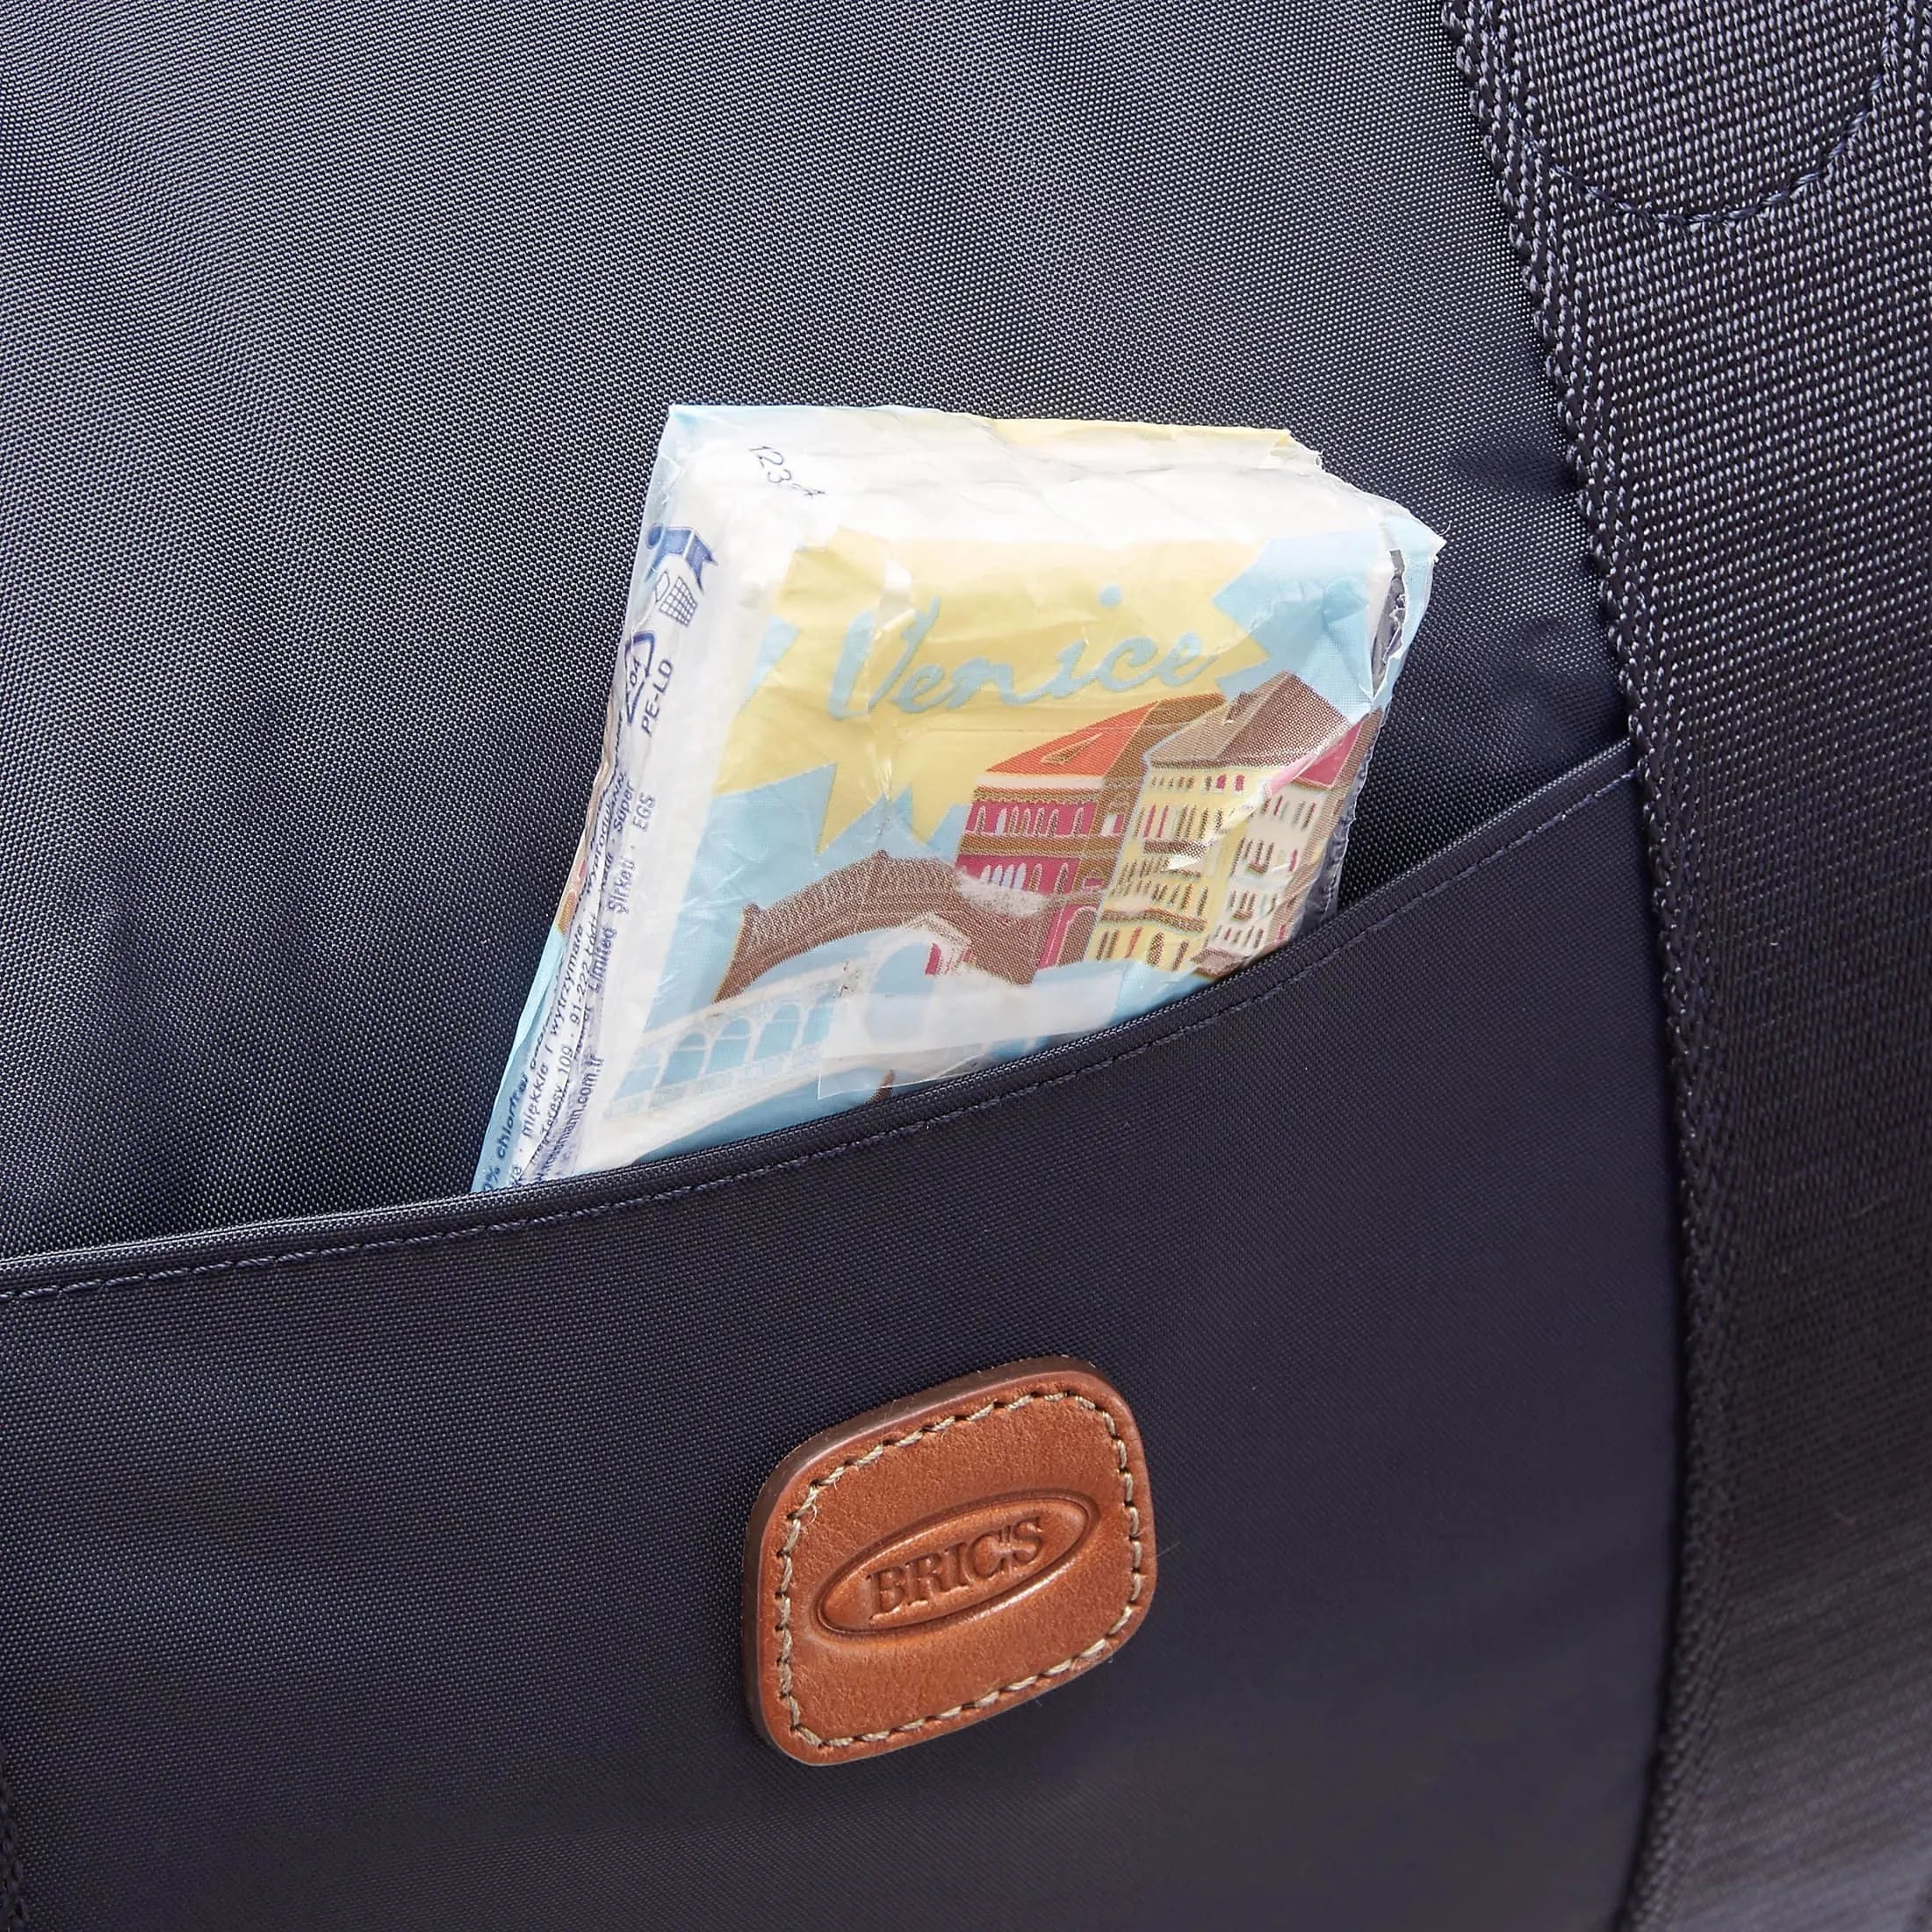 Brics X-Bag Reisetasche 55 cm - beige